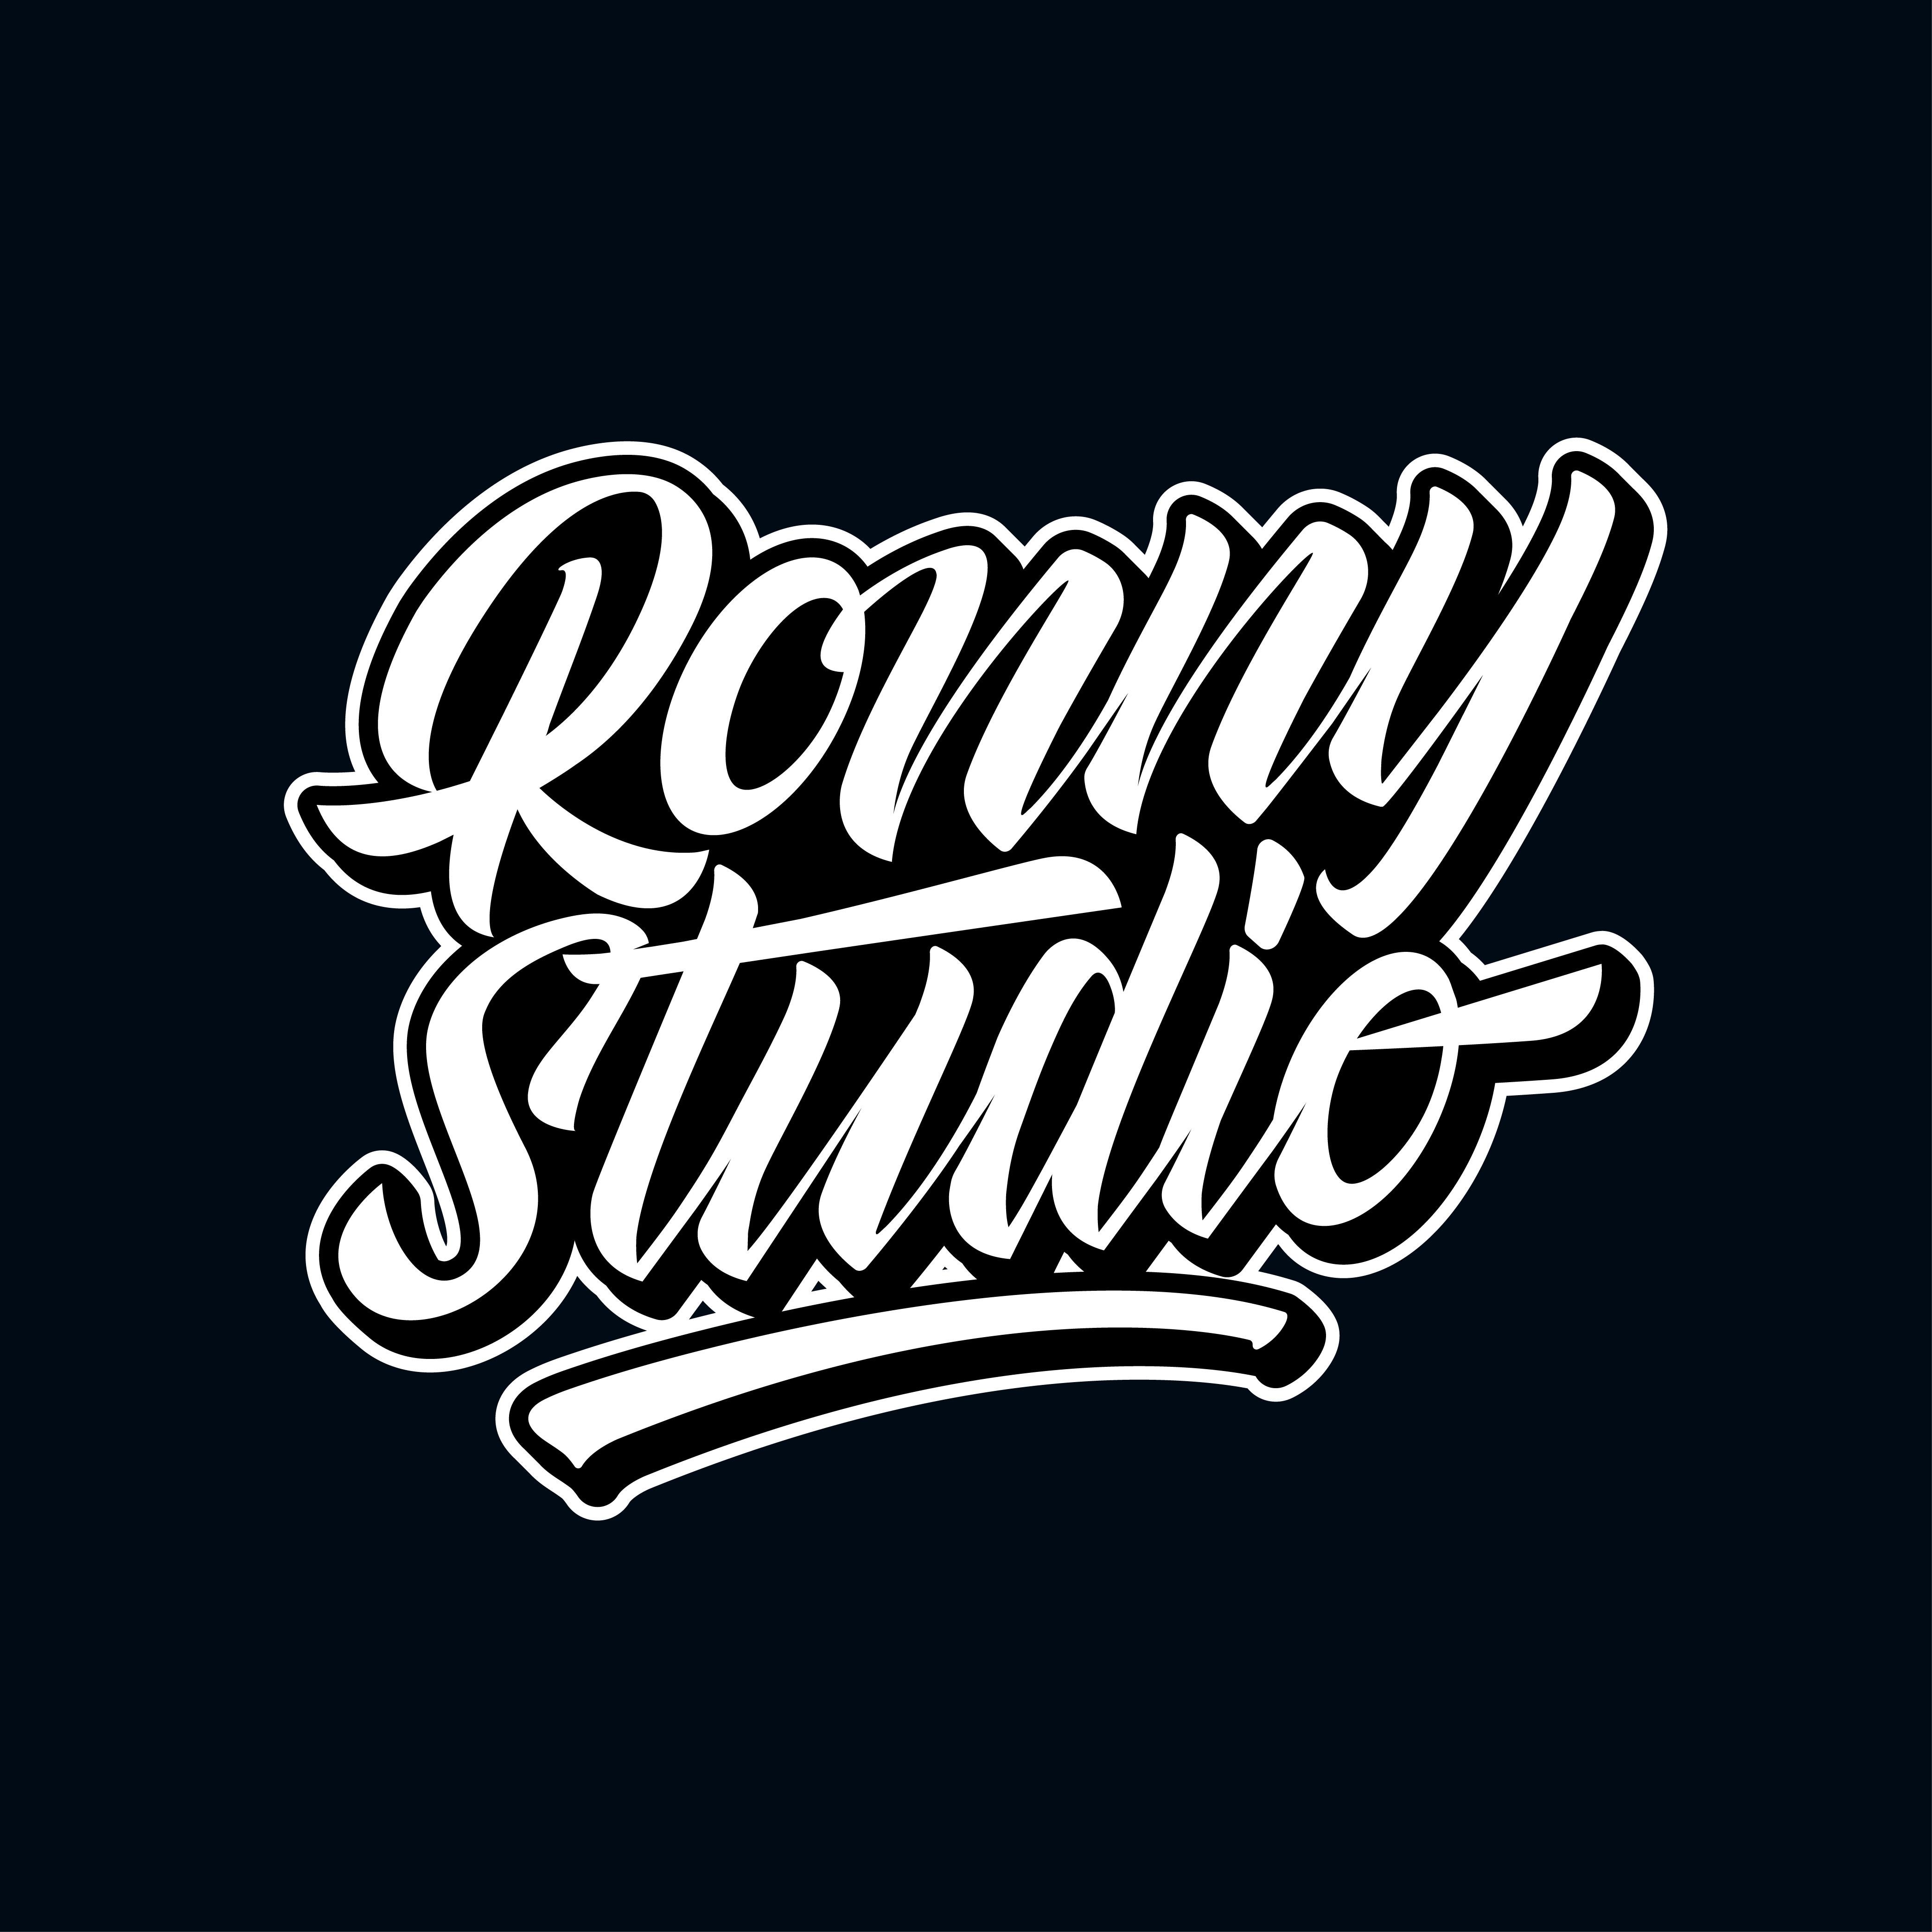 Ronny Studio